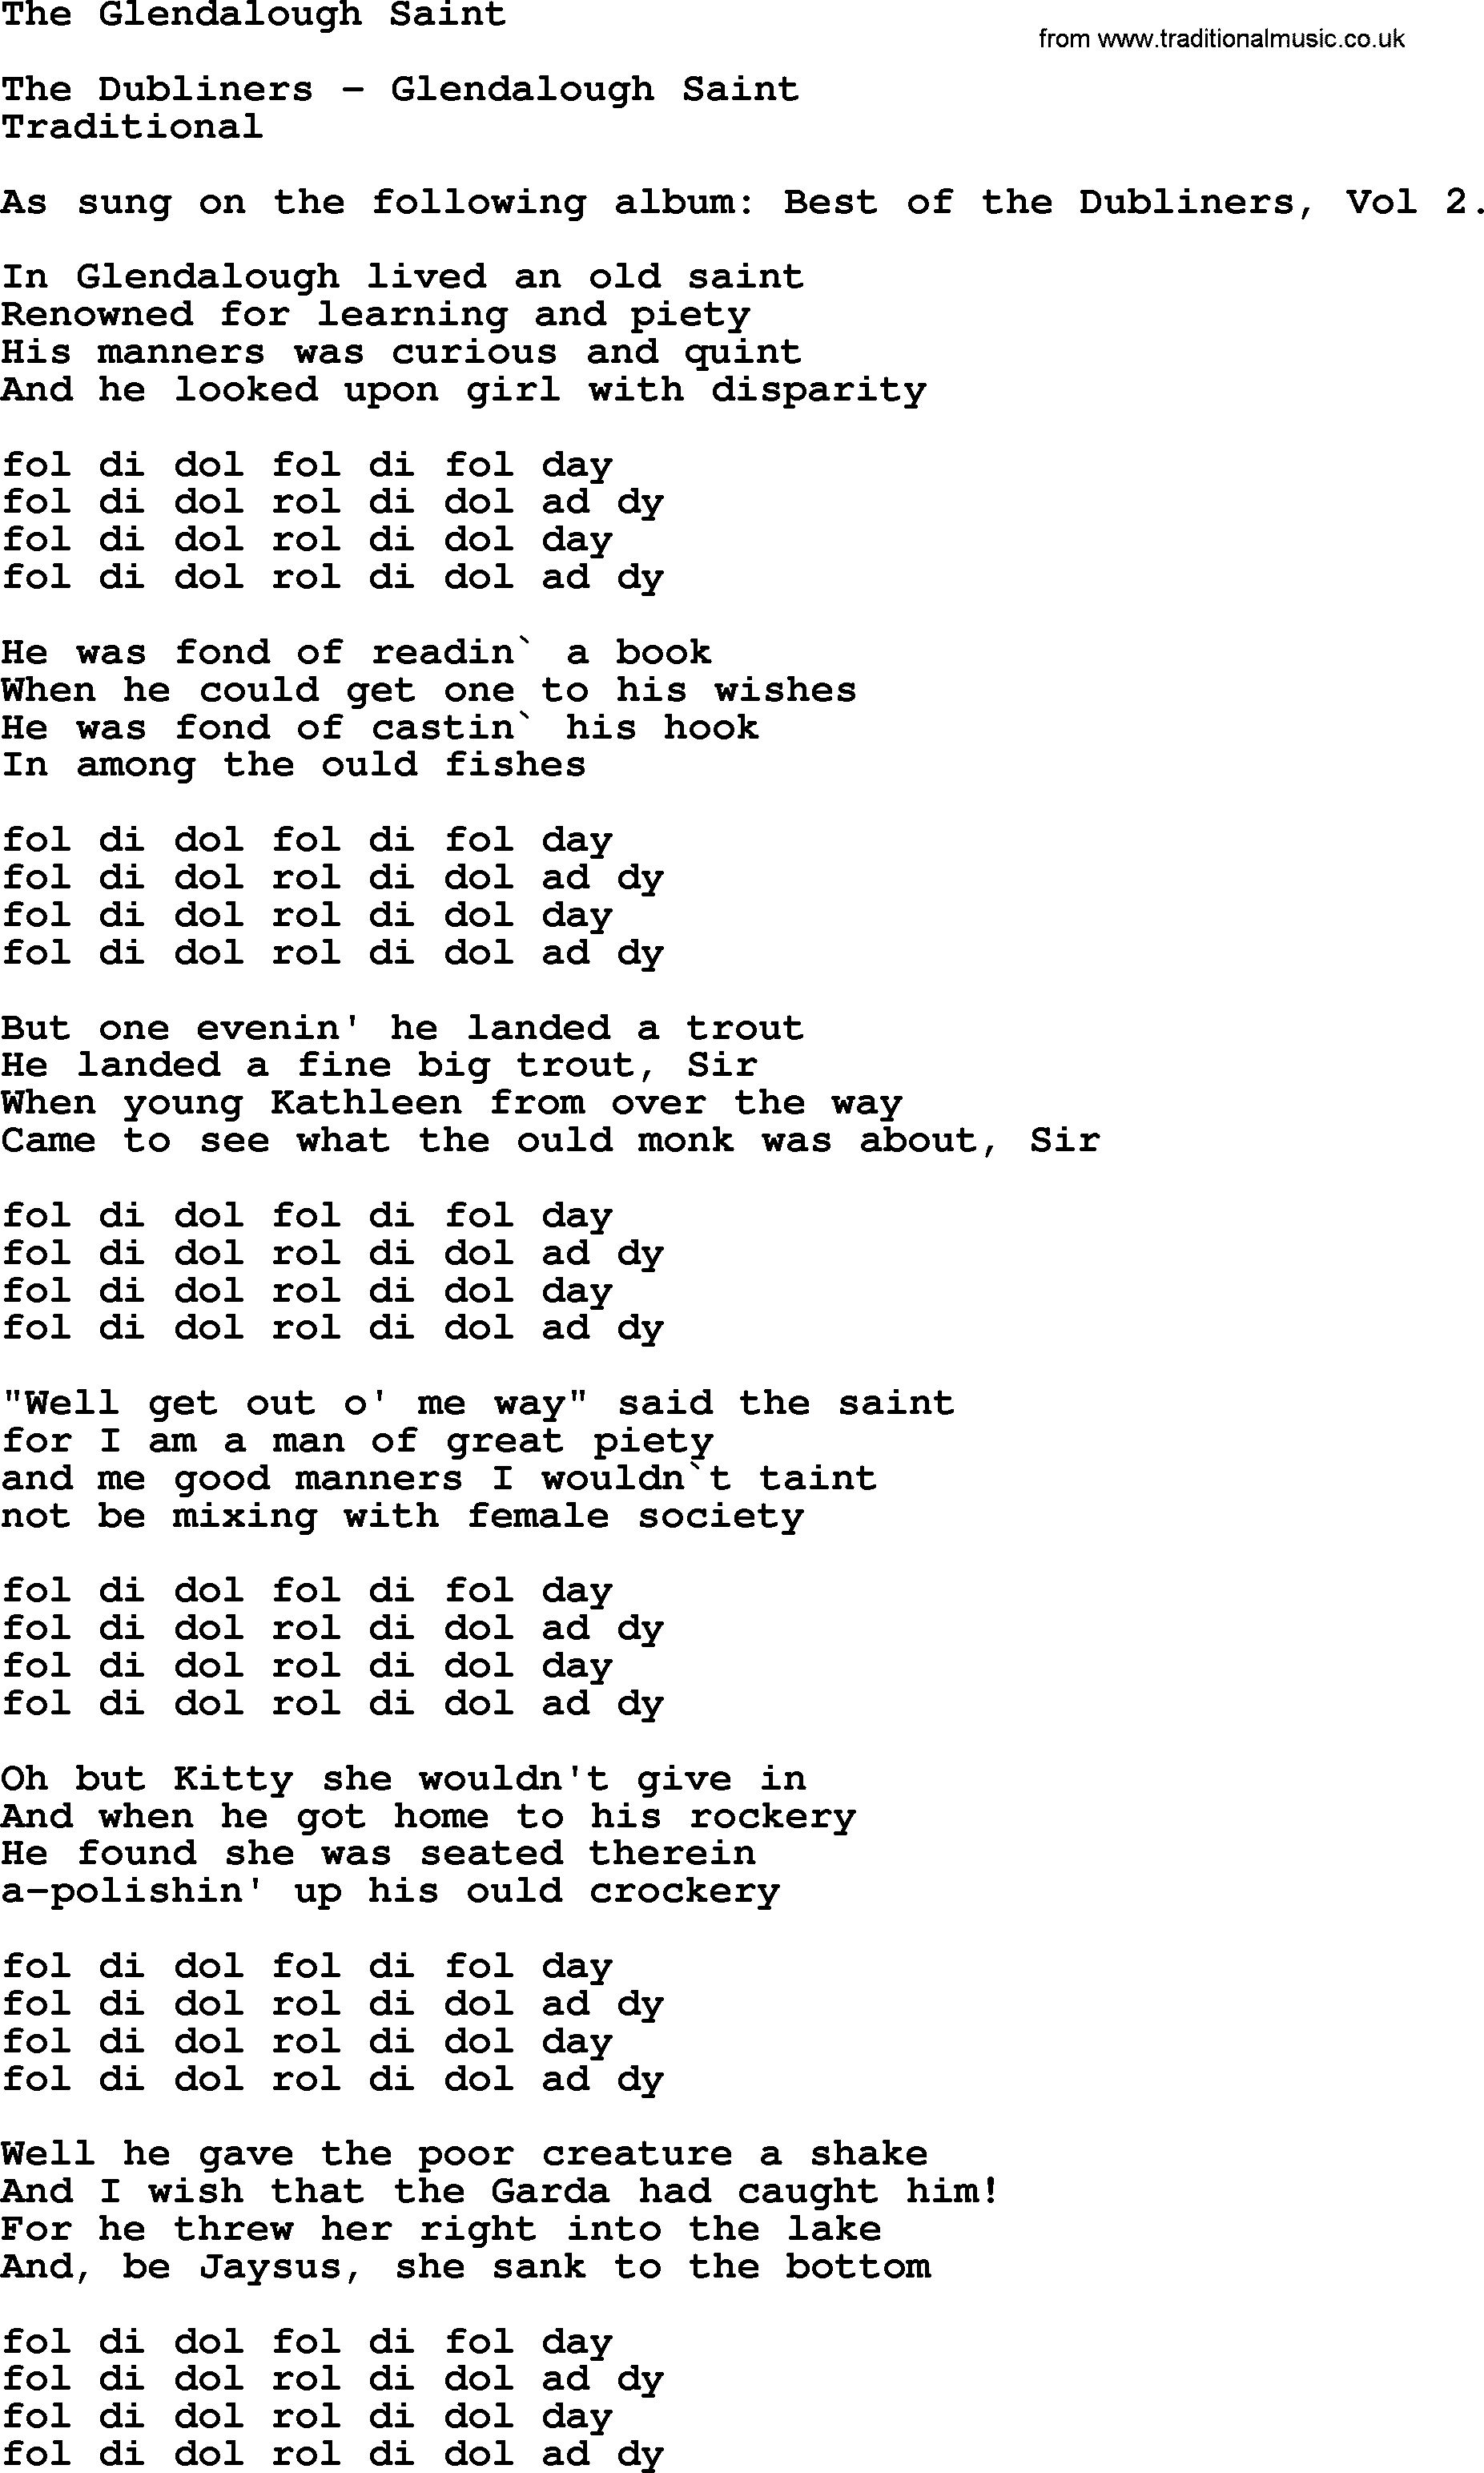 The Dubliners song: The Glendalough Saint, lyrics